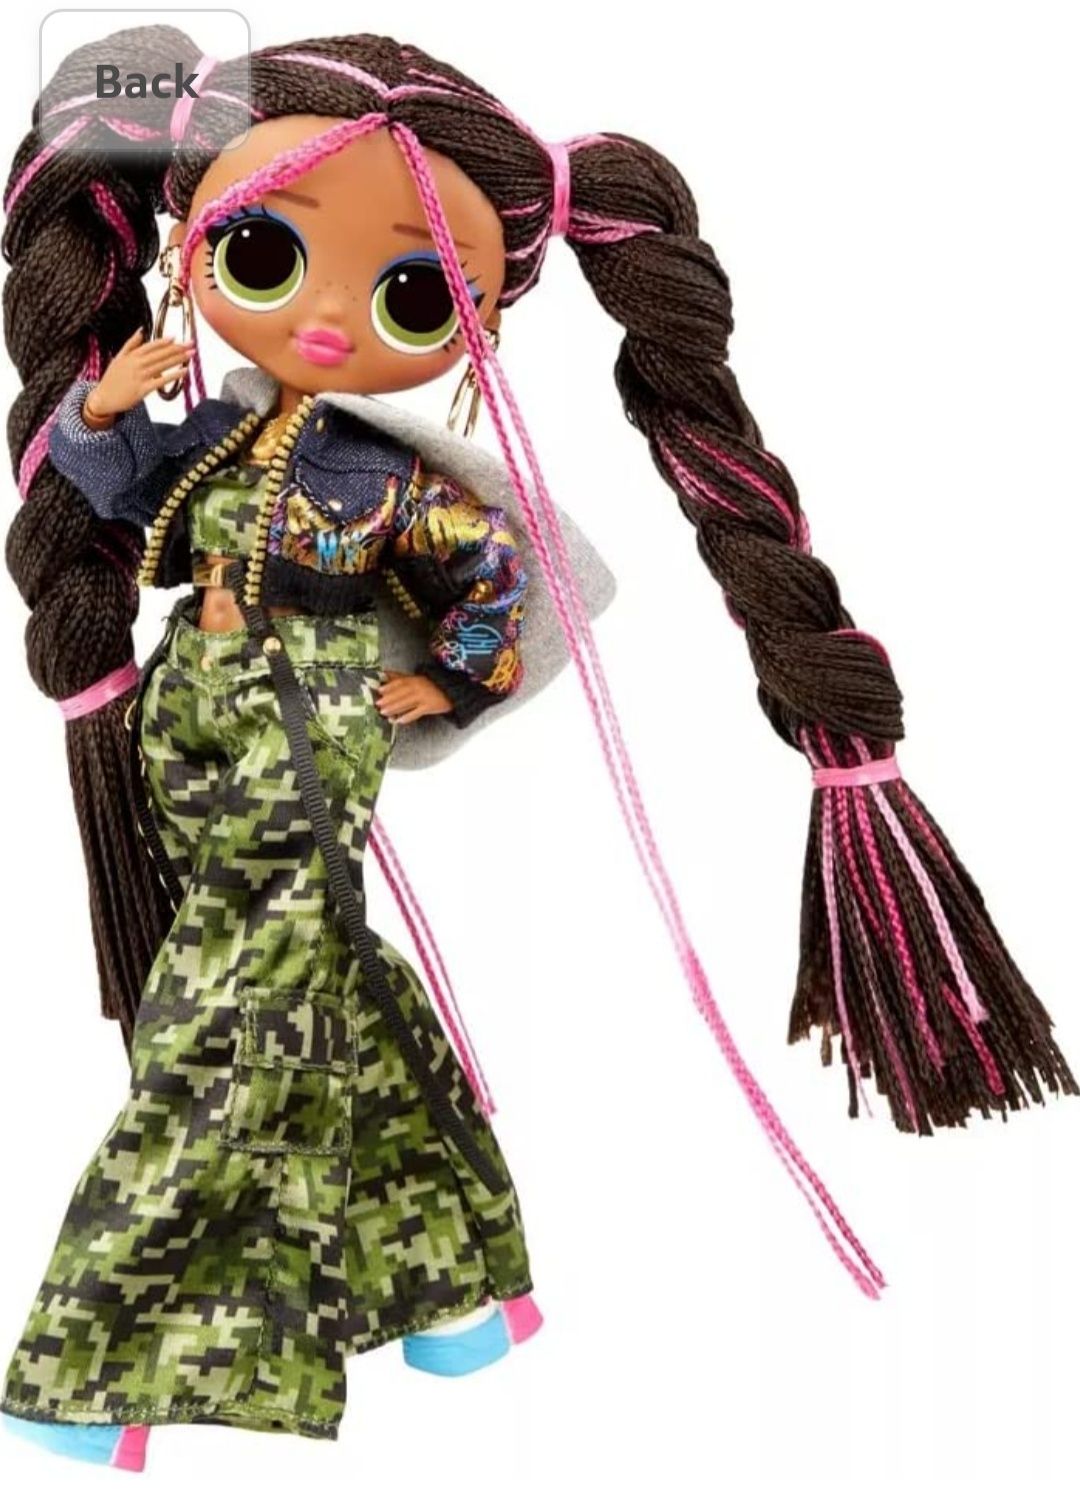 Уцінка! L.O.L. Surprise! O.M.G. fashion doll Honeylicious лялька кукла